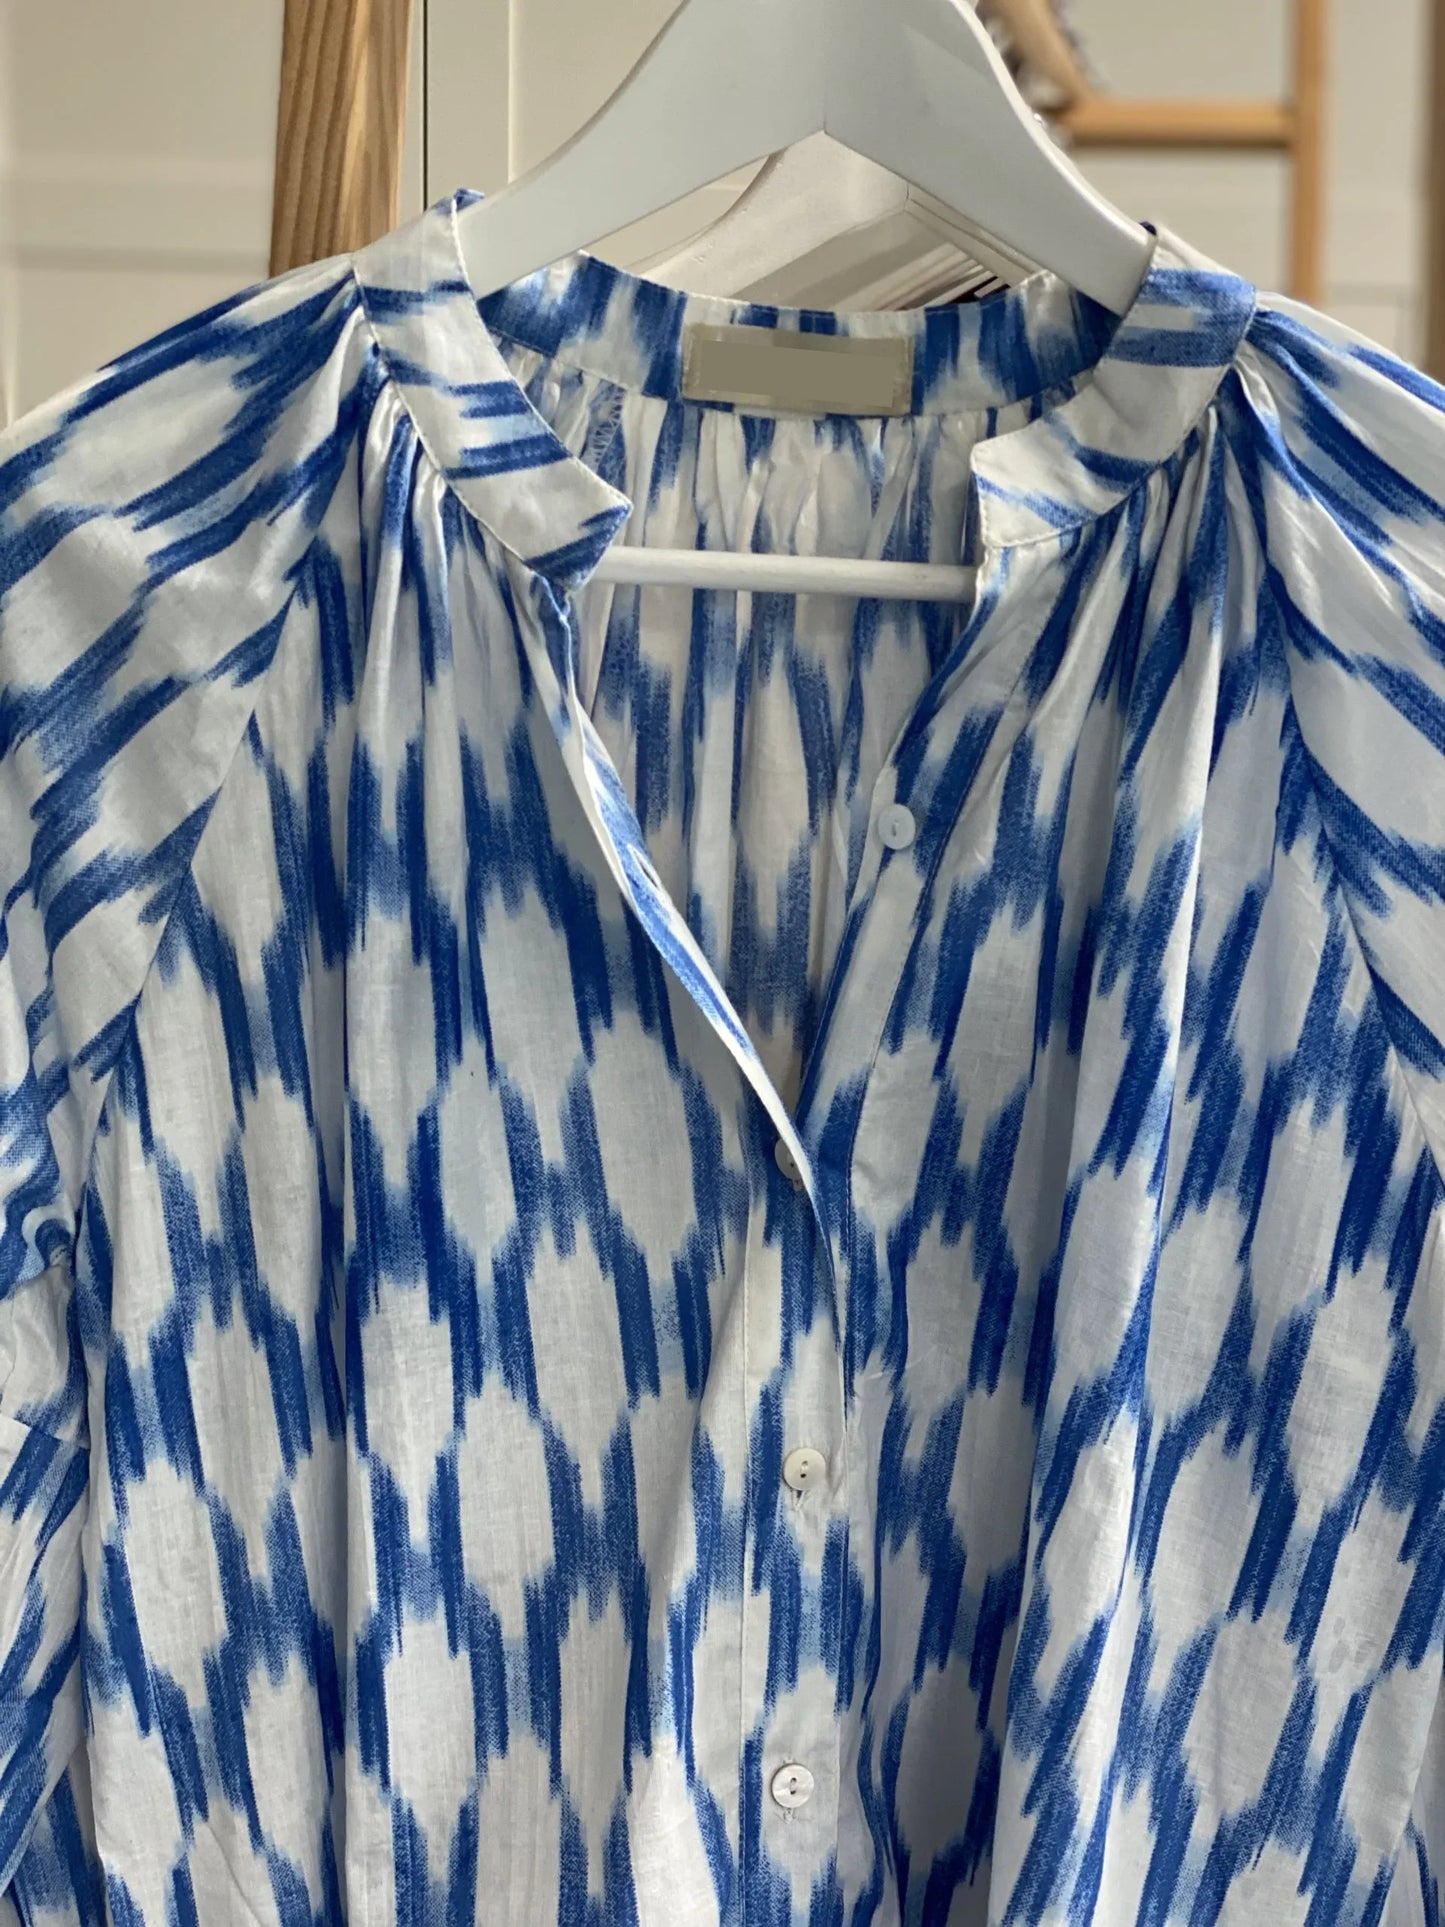 camisa étnica o blusa de algodón estampada flores para verano. tiene print mallorquín ikat azul y blanco. white and blue ikkat print cotton blouse